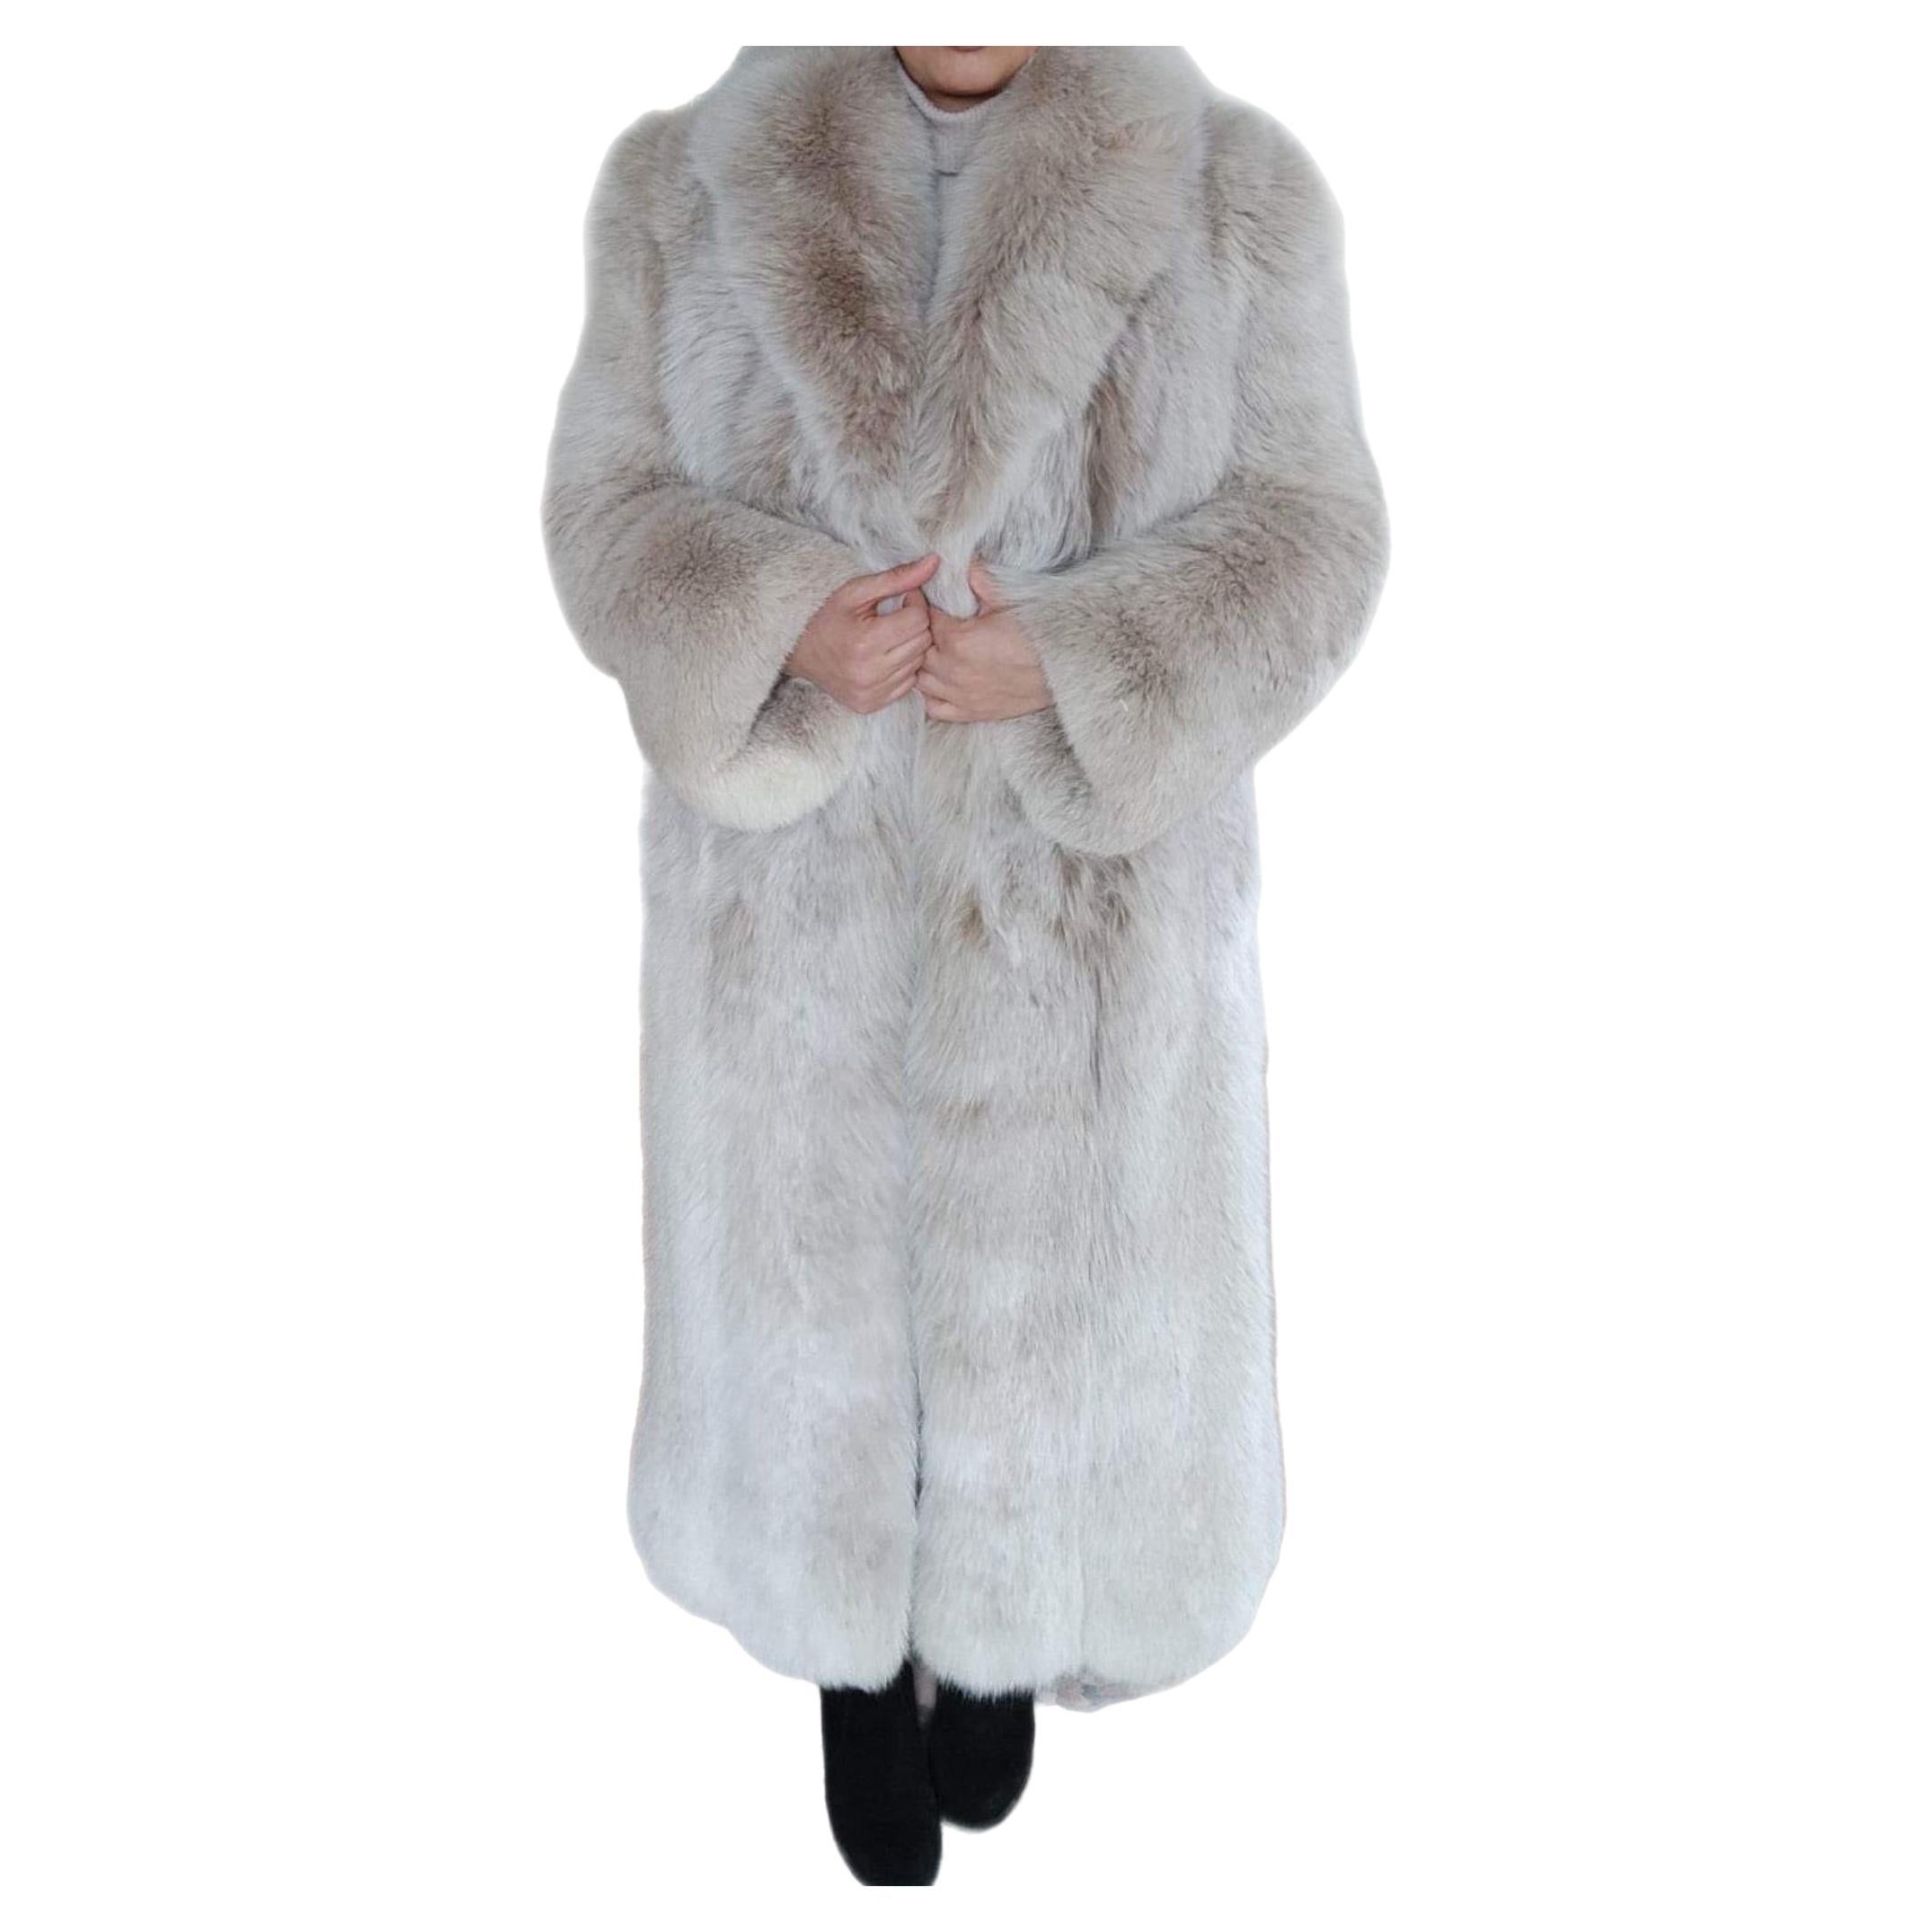 Brand new lightweight saga fox fur coat size 8 For Sale